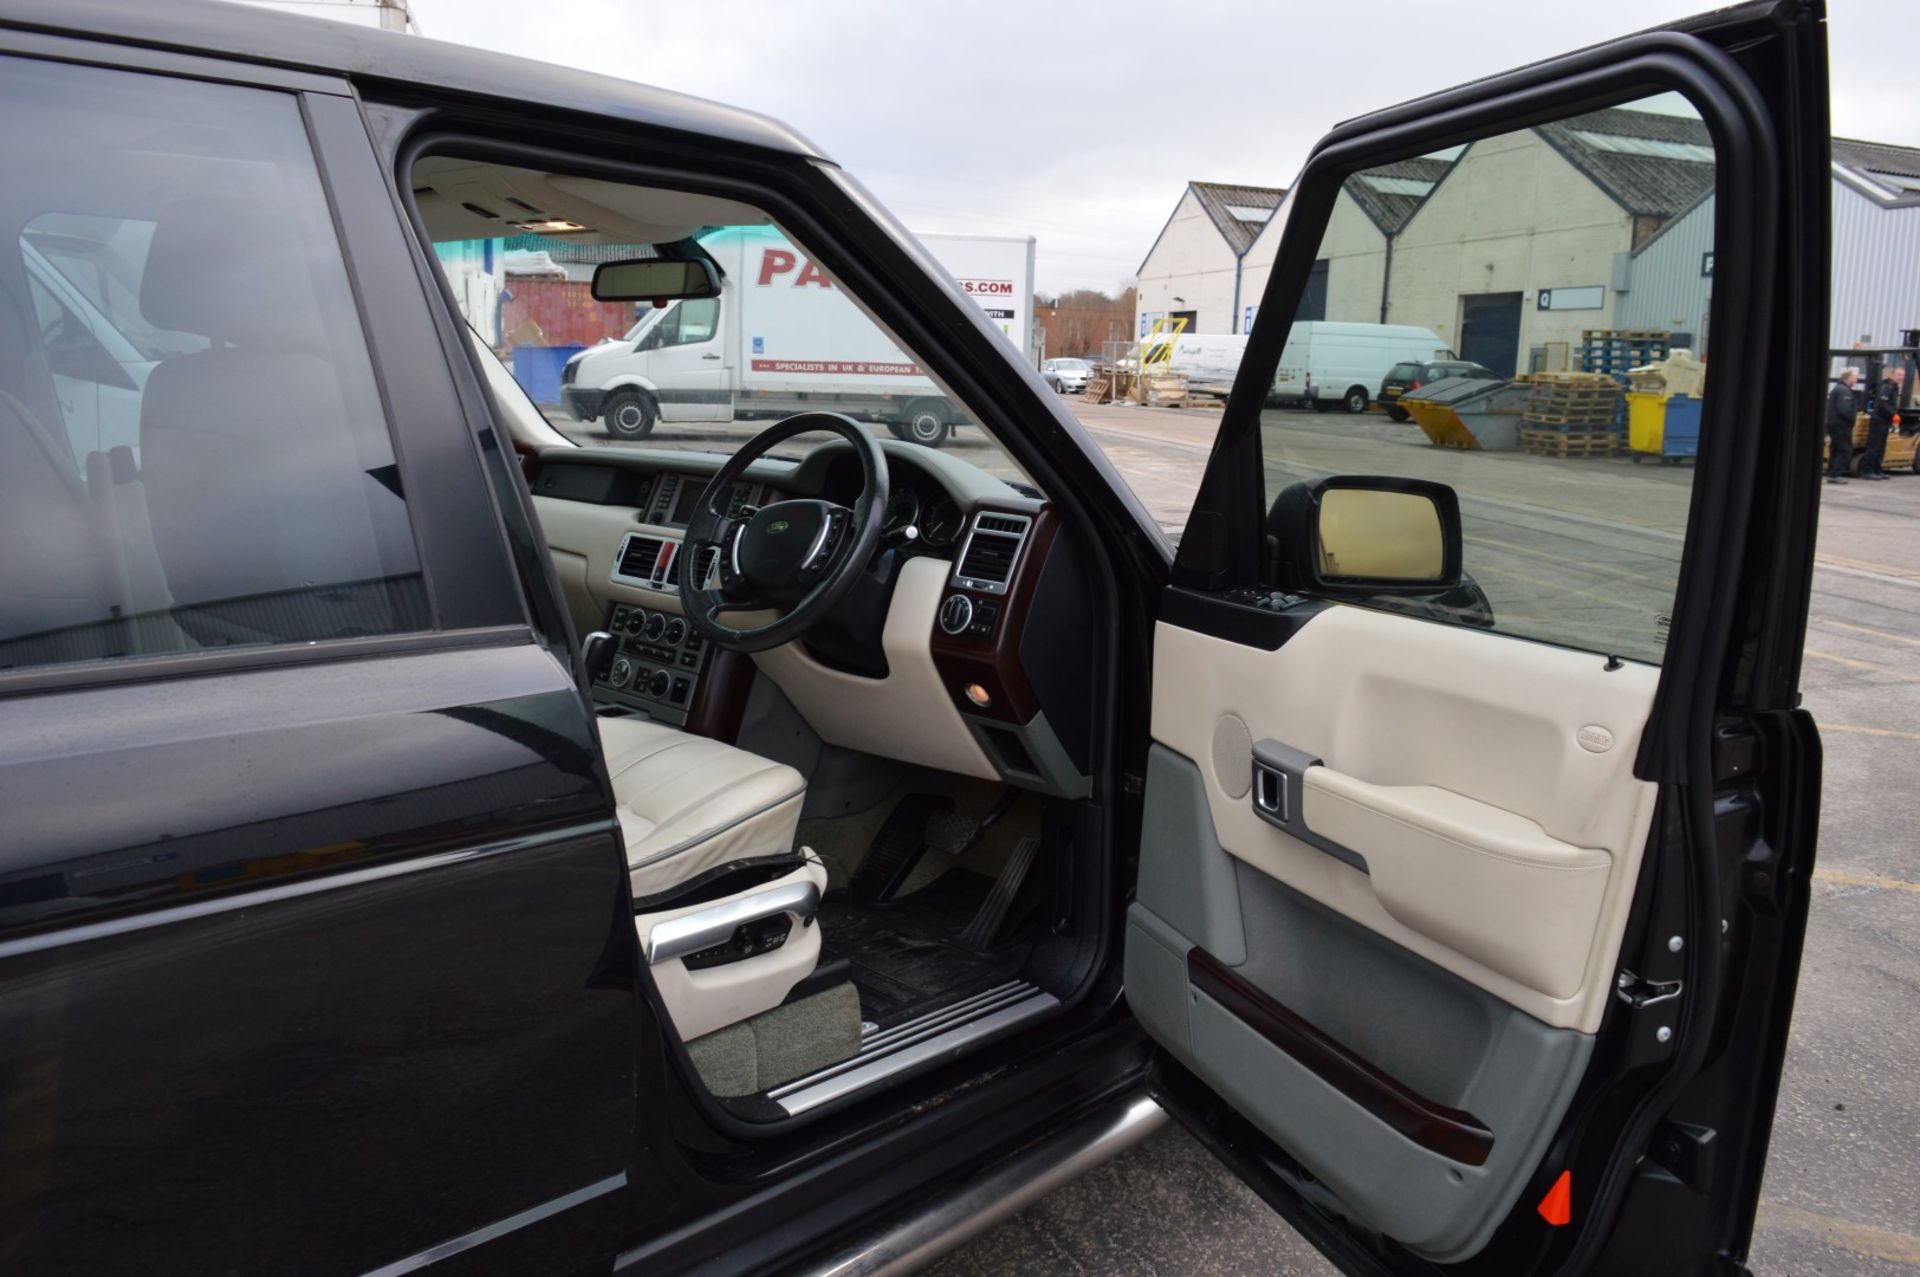 1 x Range Rover Vogue V8 4.4 Automatic - Black, Leather Interior, Petrol, Television, Premium - Image 10 of 63